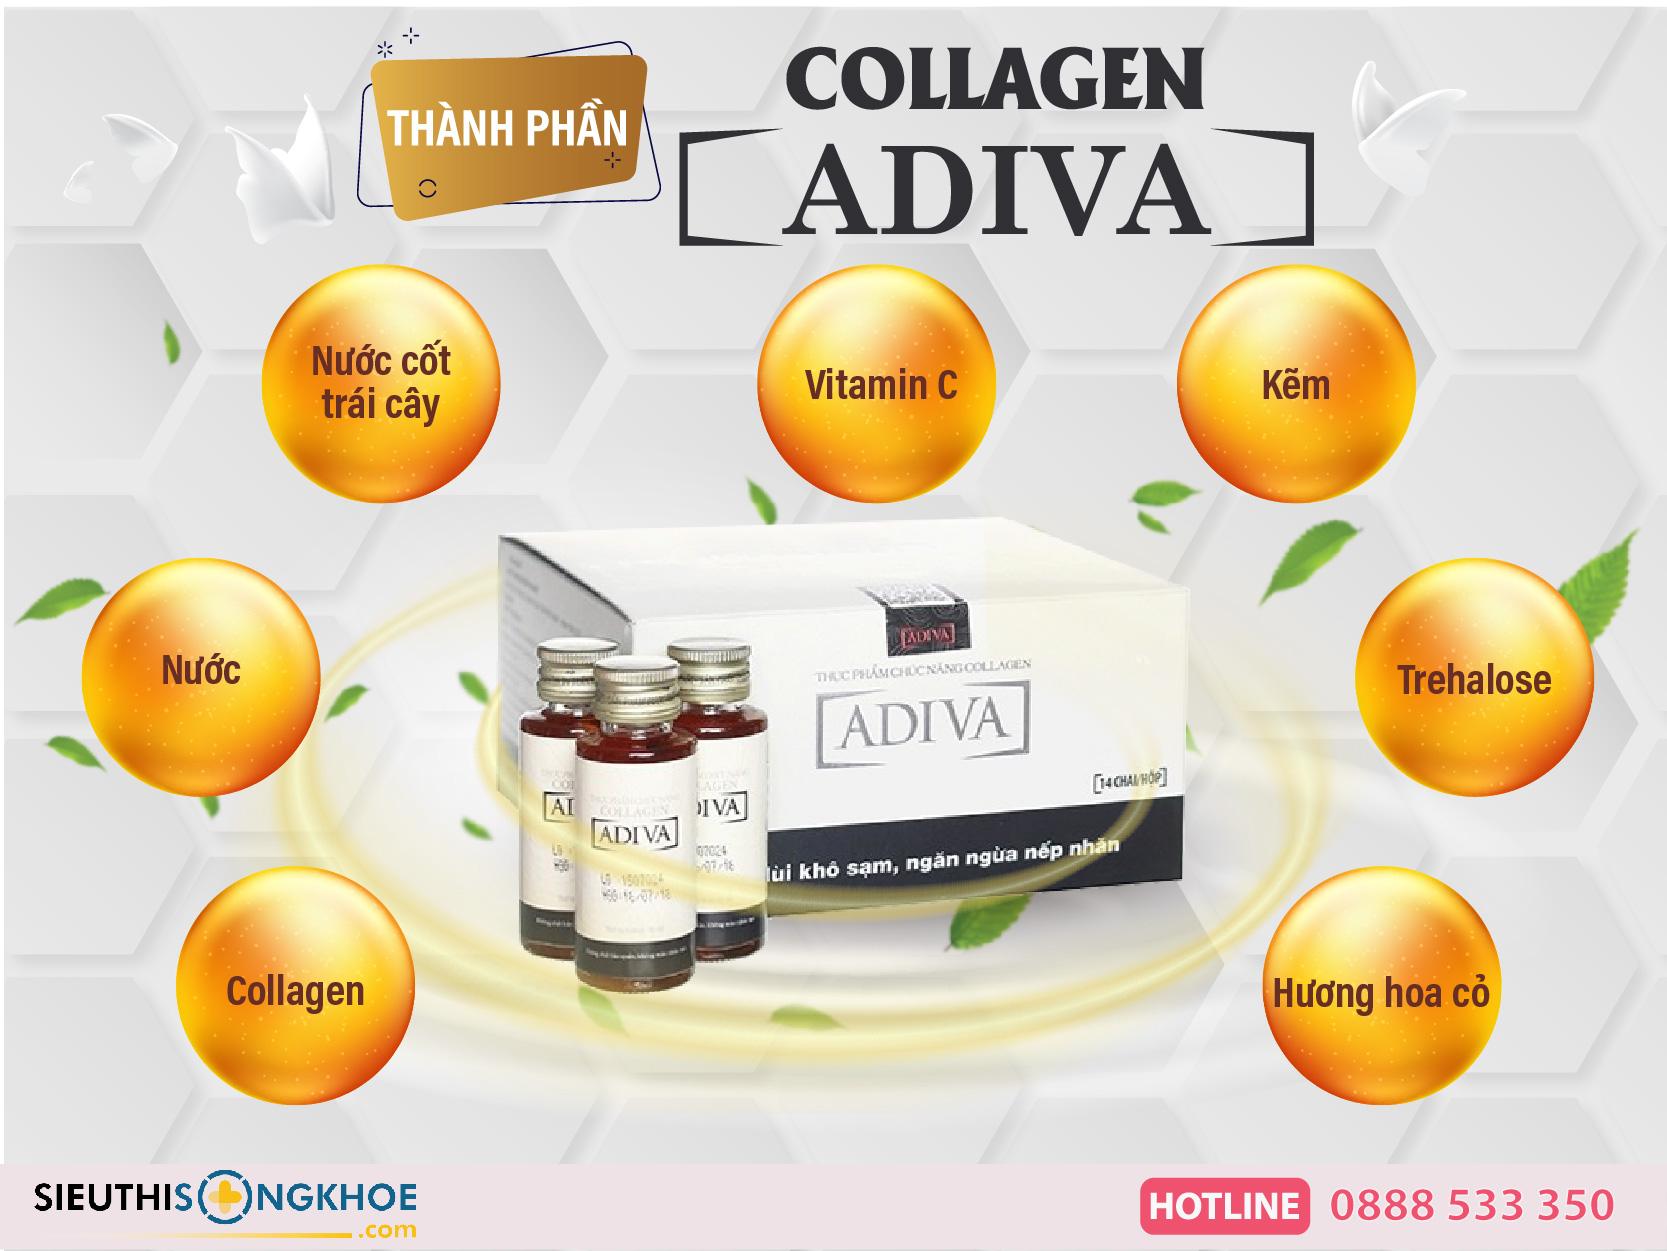 thanh phan nuoc collagen adiva